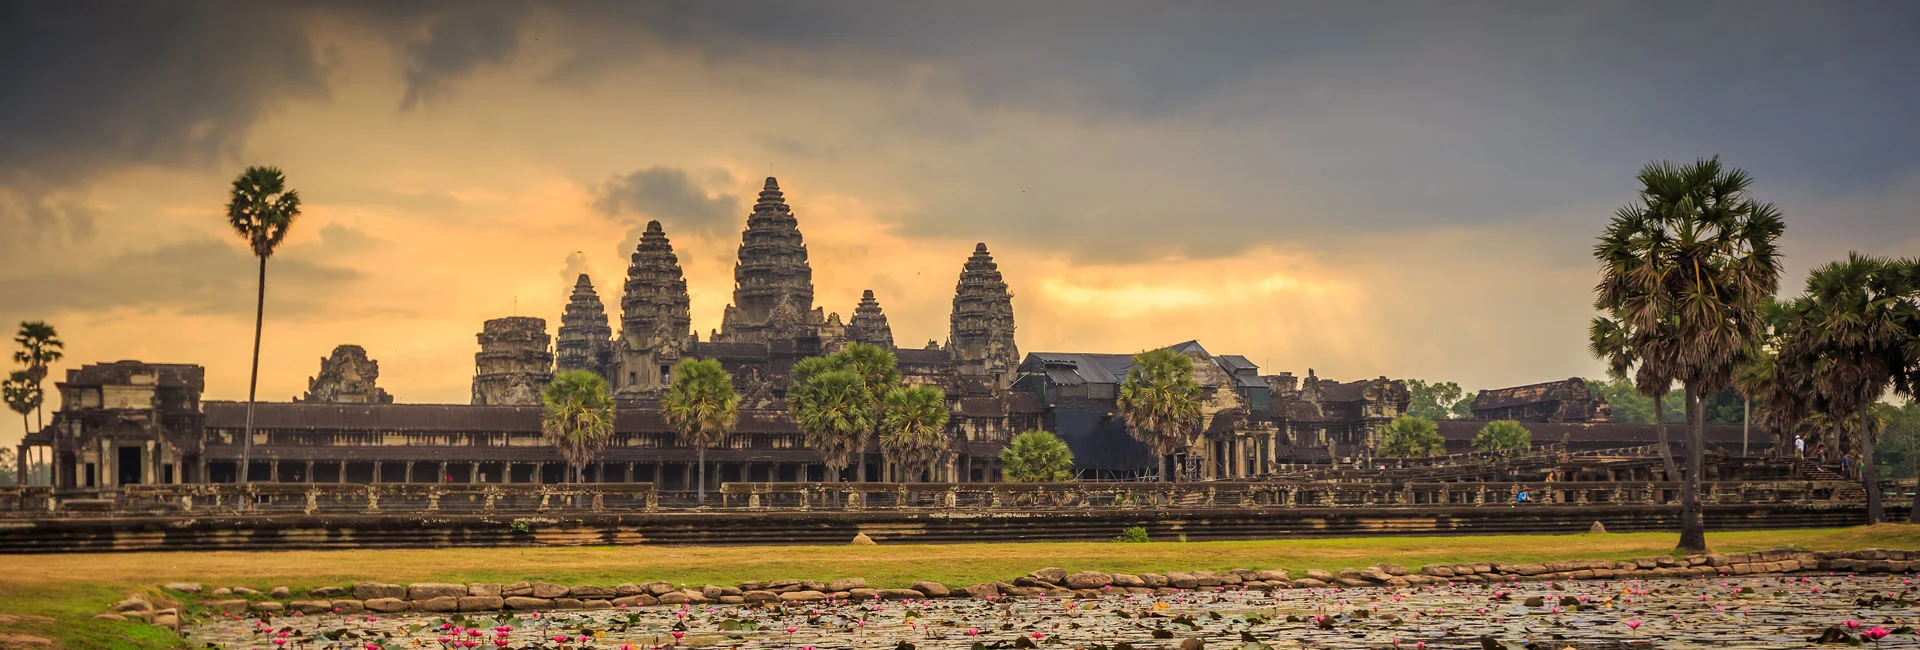 Simply Angkor Temples